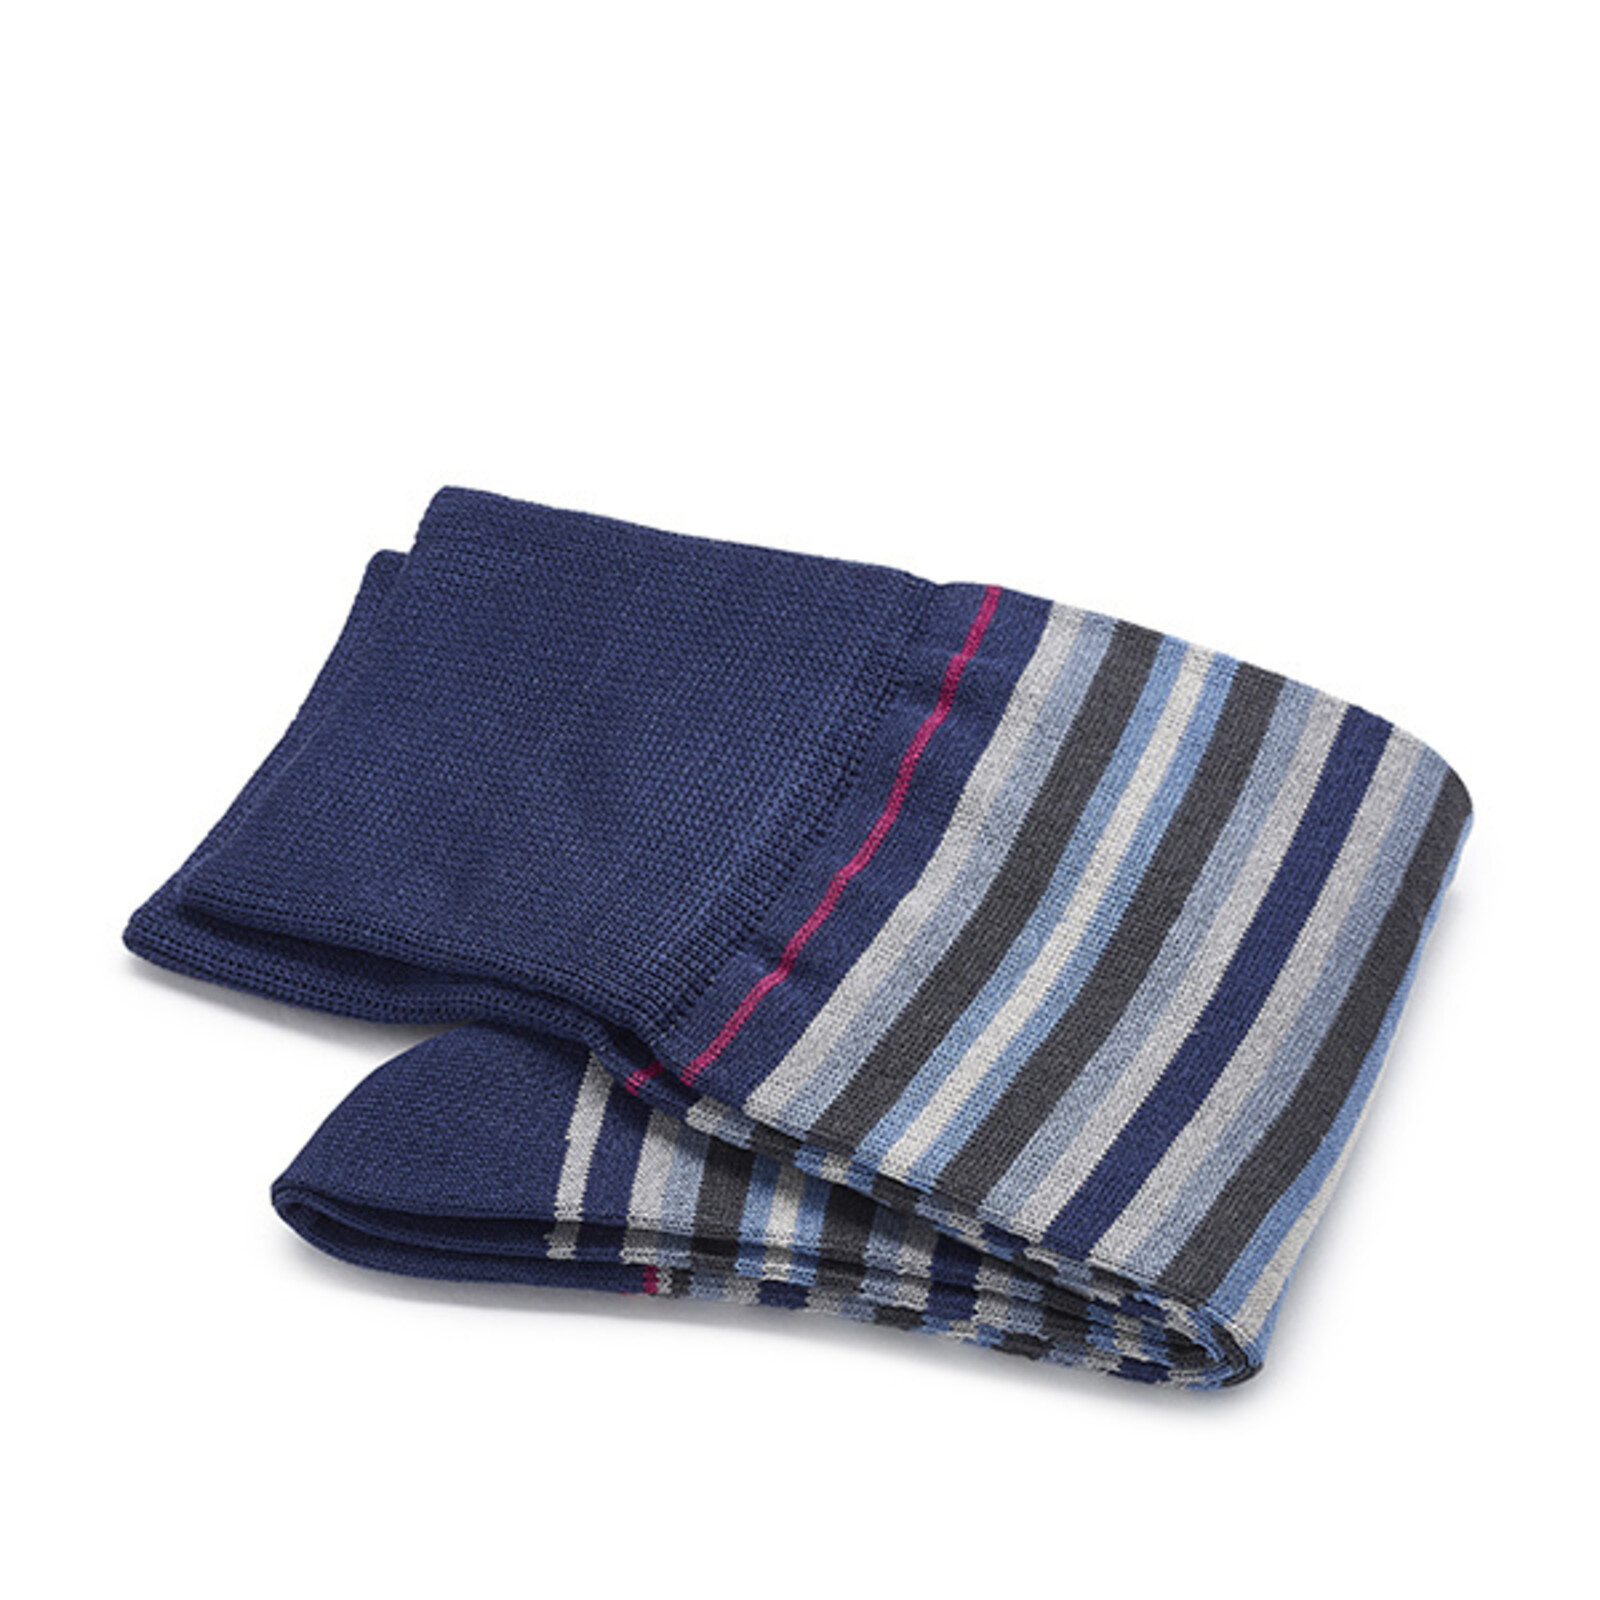 Carlo Lanza Blue grey stripe socks